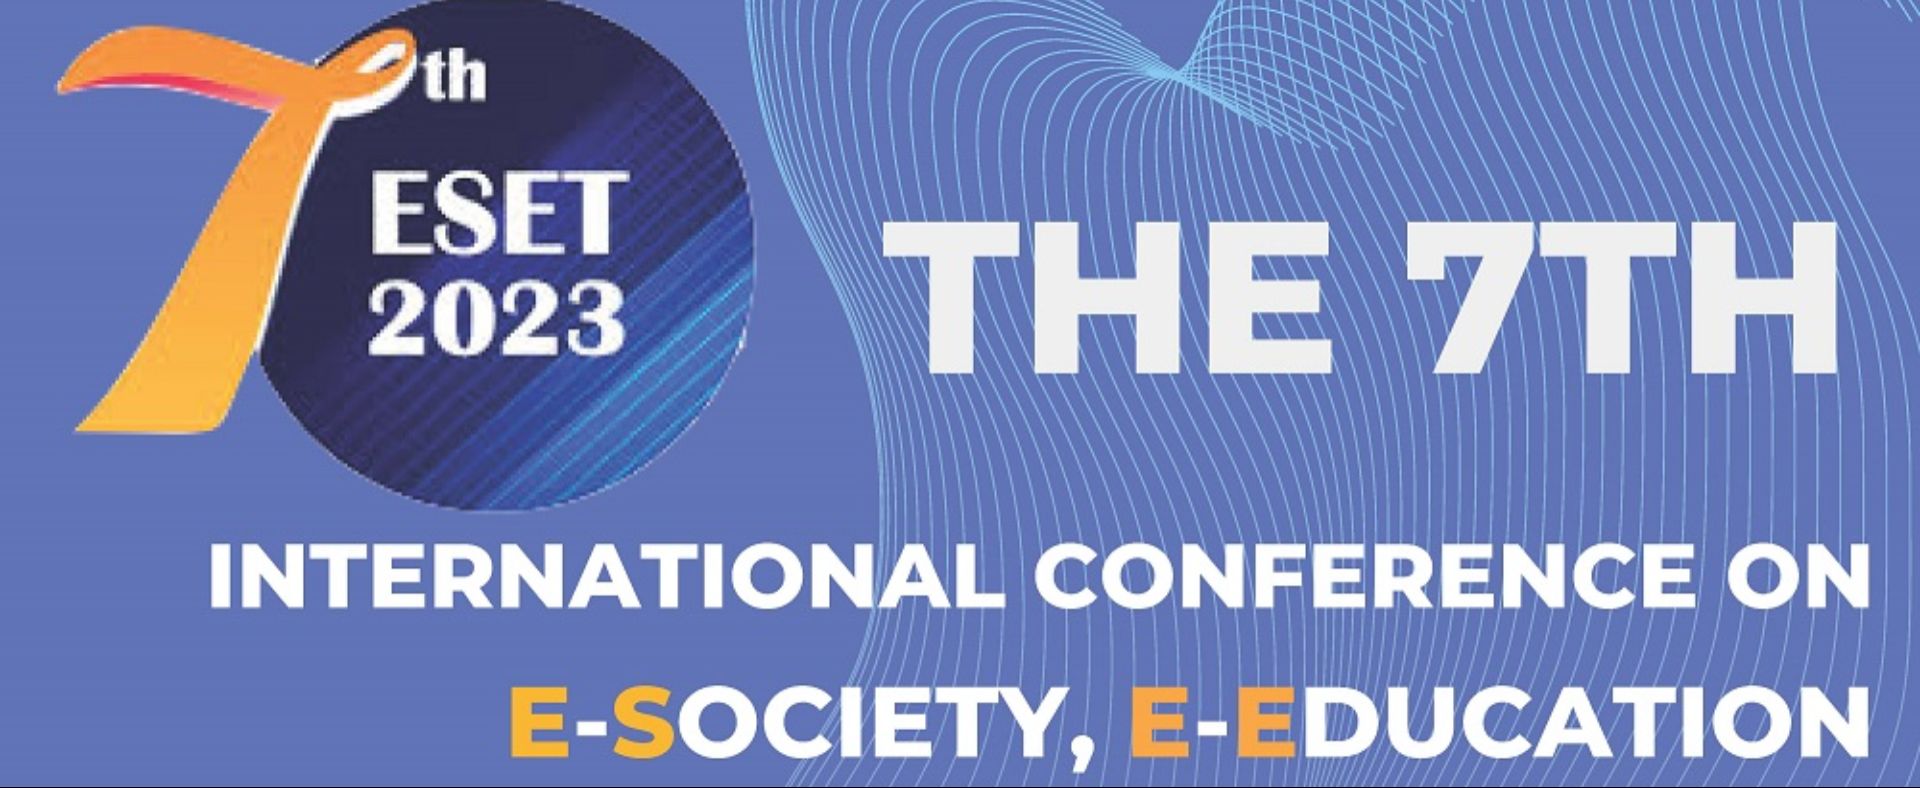 7th ESET2023 THE 7TH INTERNATIONAL CONFERENCE ON E-SOCIETY,E-EDUCATION AND E-TECHINOLGY